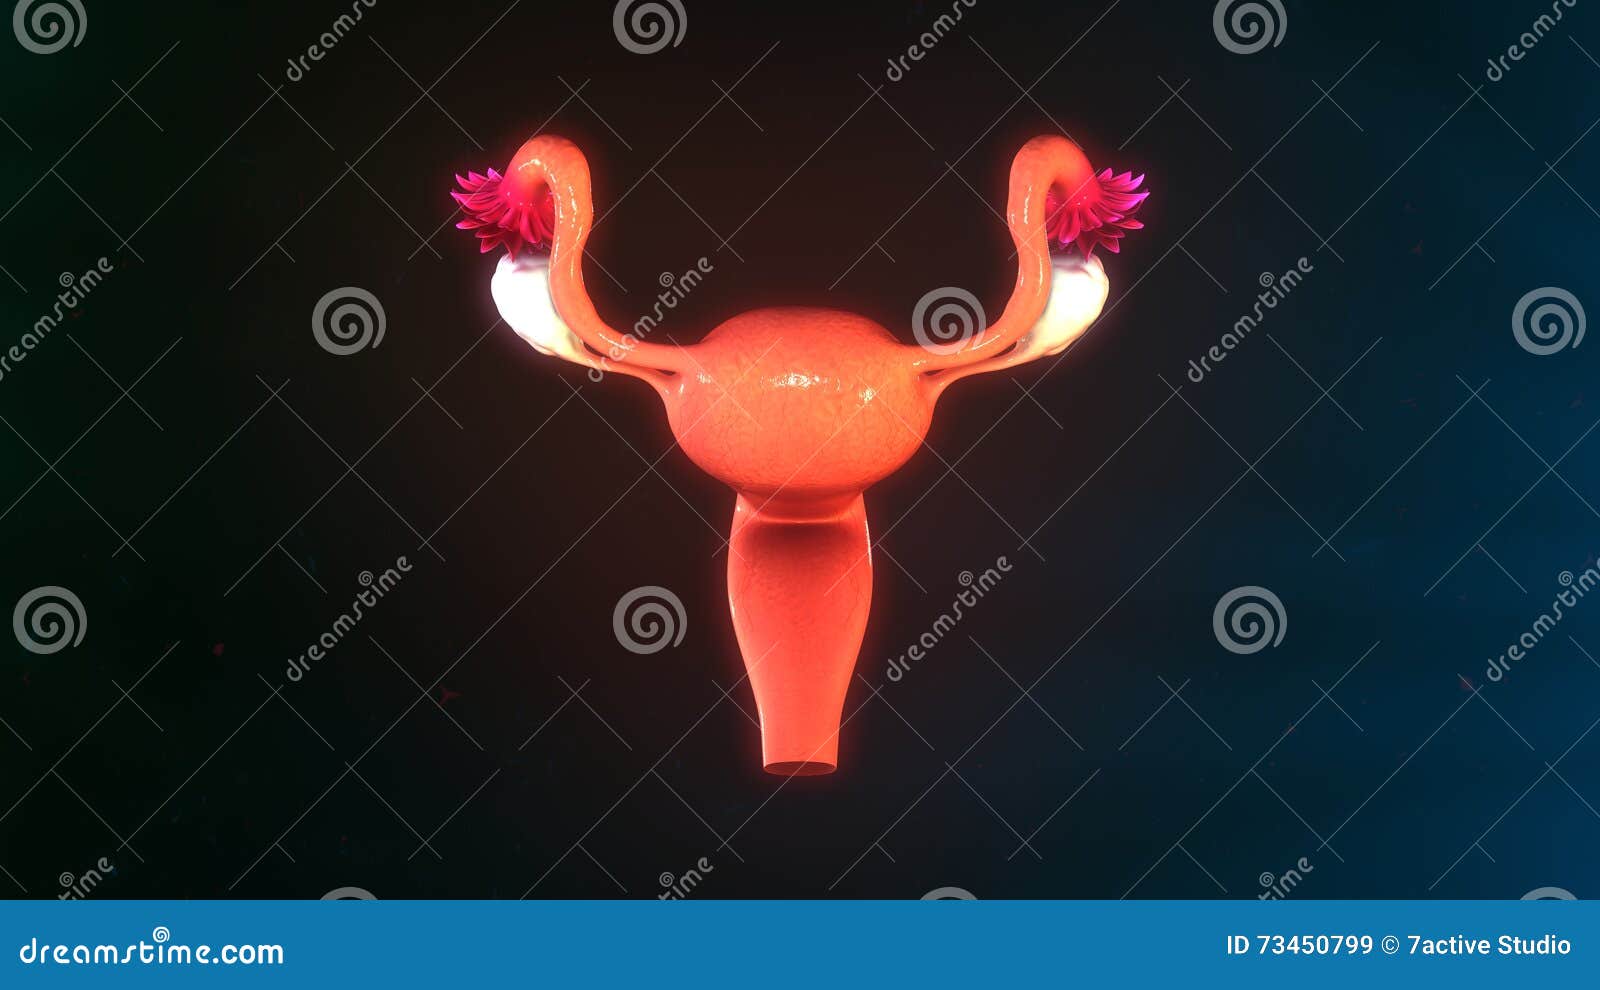 uterus front view